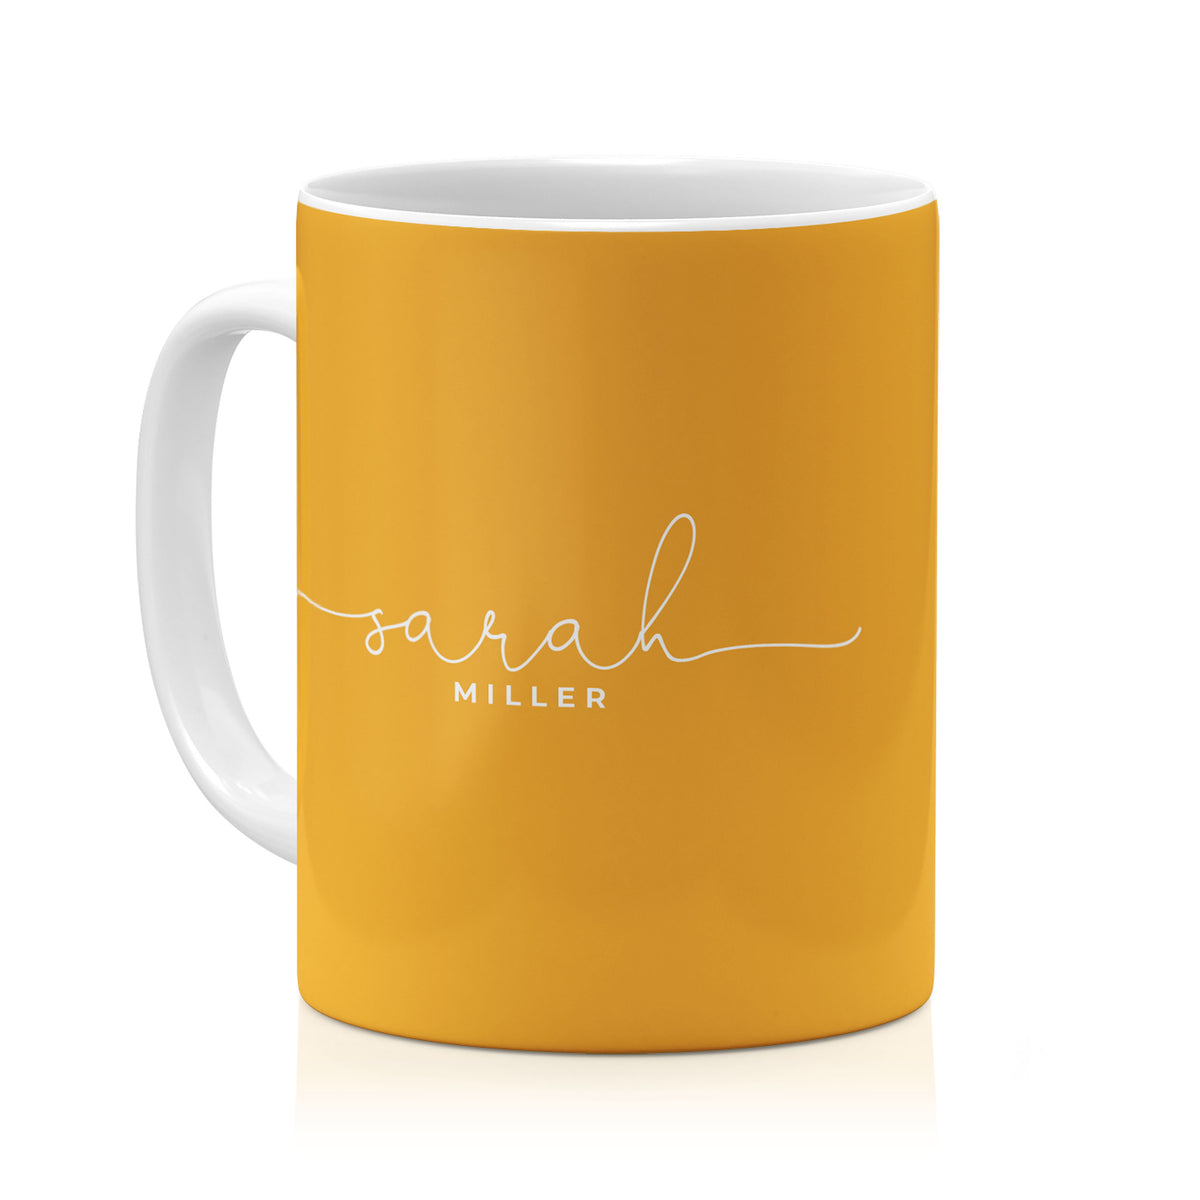 Personalised Ceramic Mug with Name Initials Text Plain Mustard Yellow White